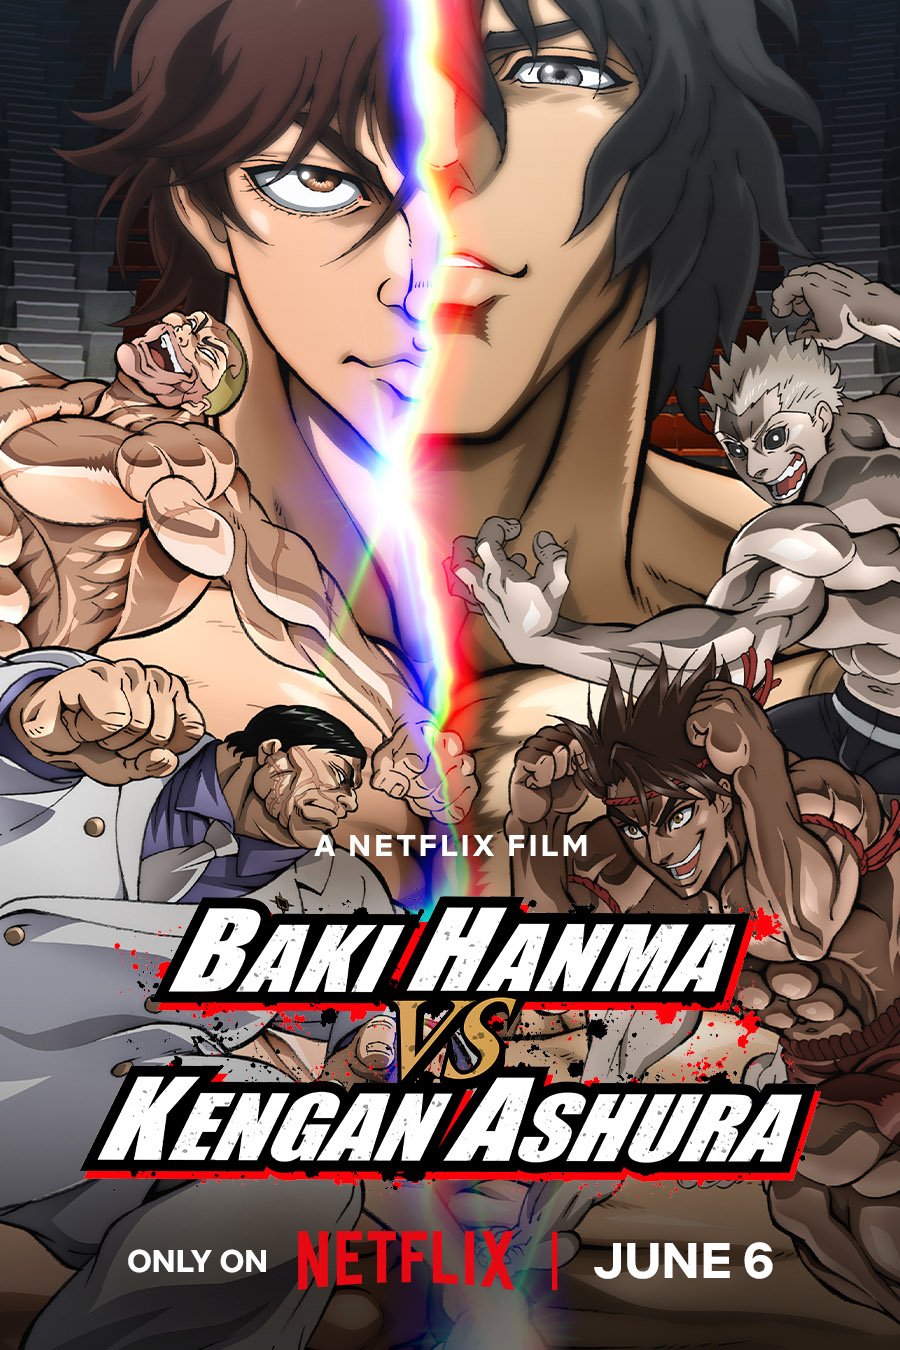 Japanese poster of the movie Baki Hanma VS Kengan Ashura